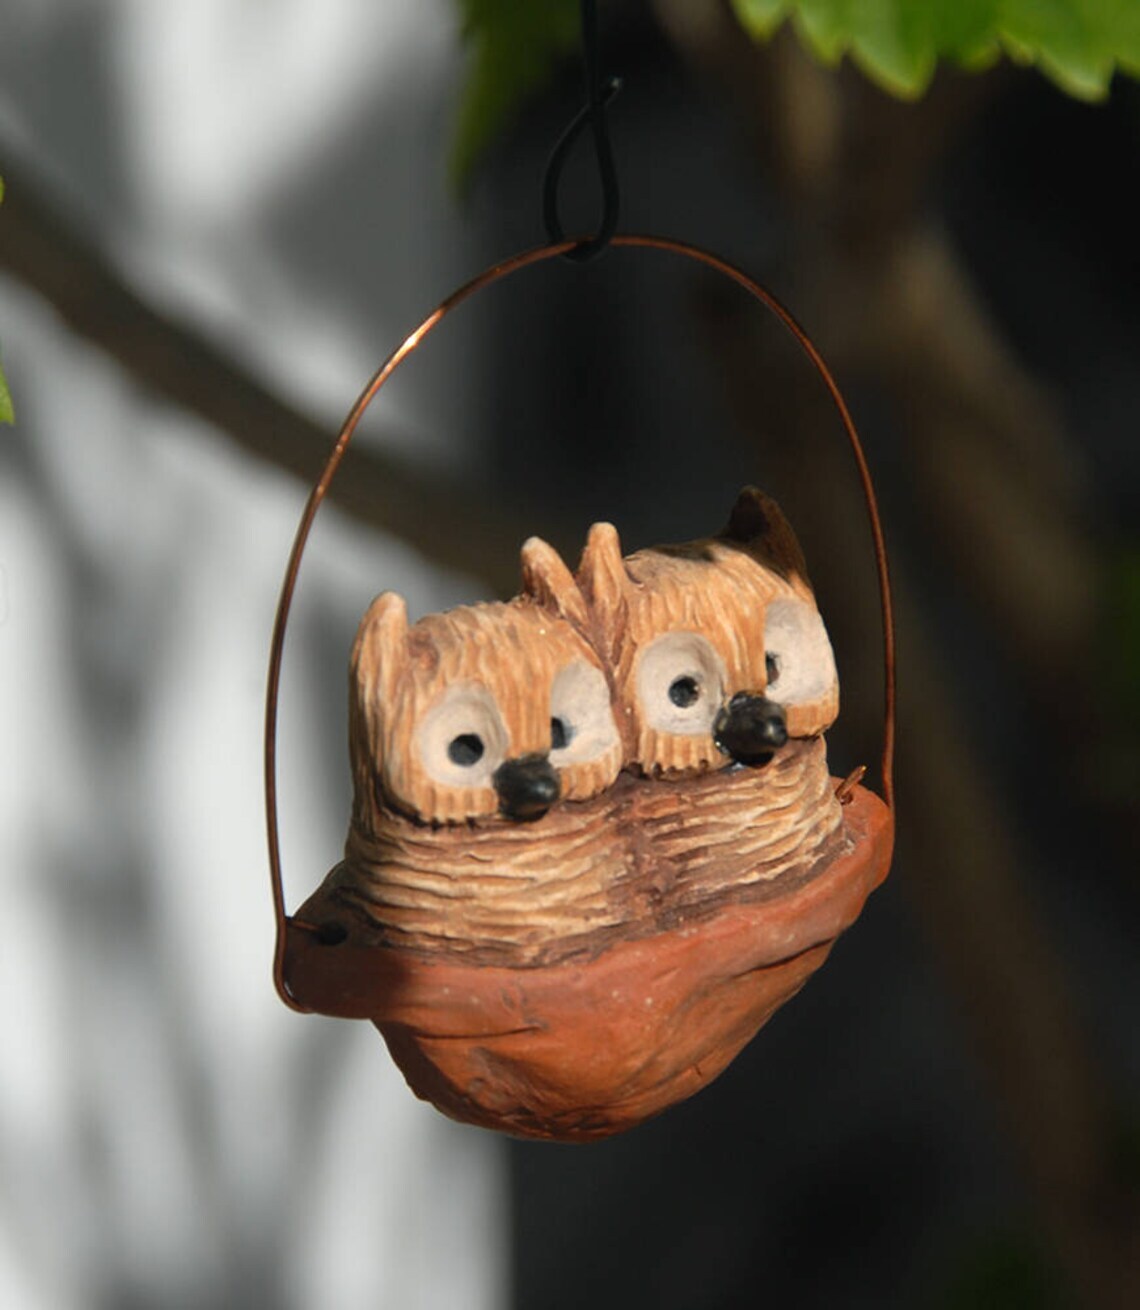 Sleeping baby screech owls ornament